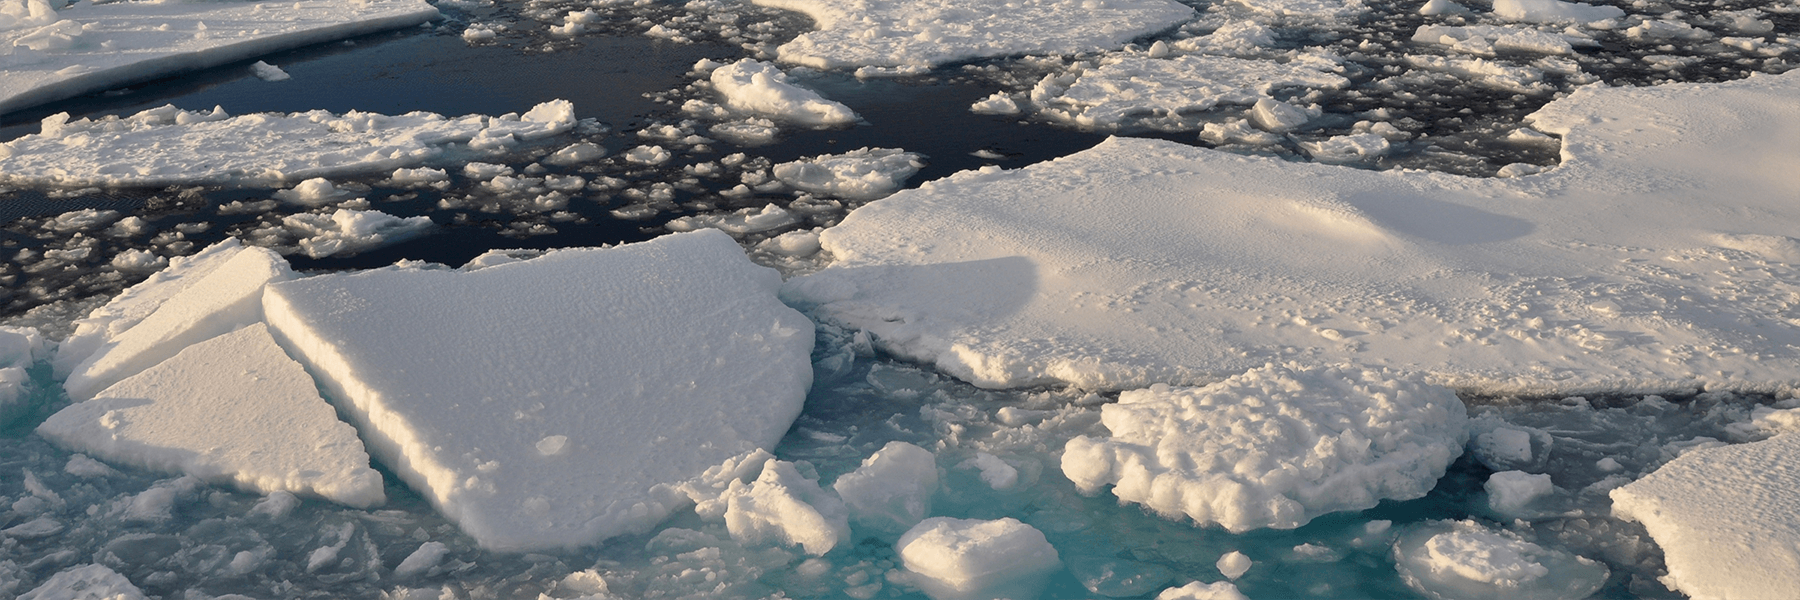 Arctic sea ice (Photo credit: USGS)